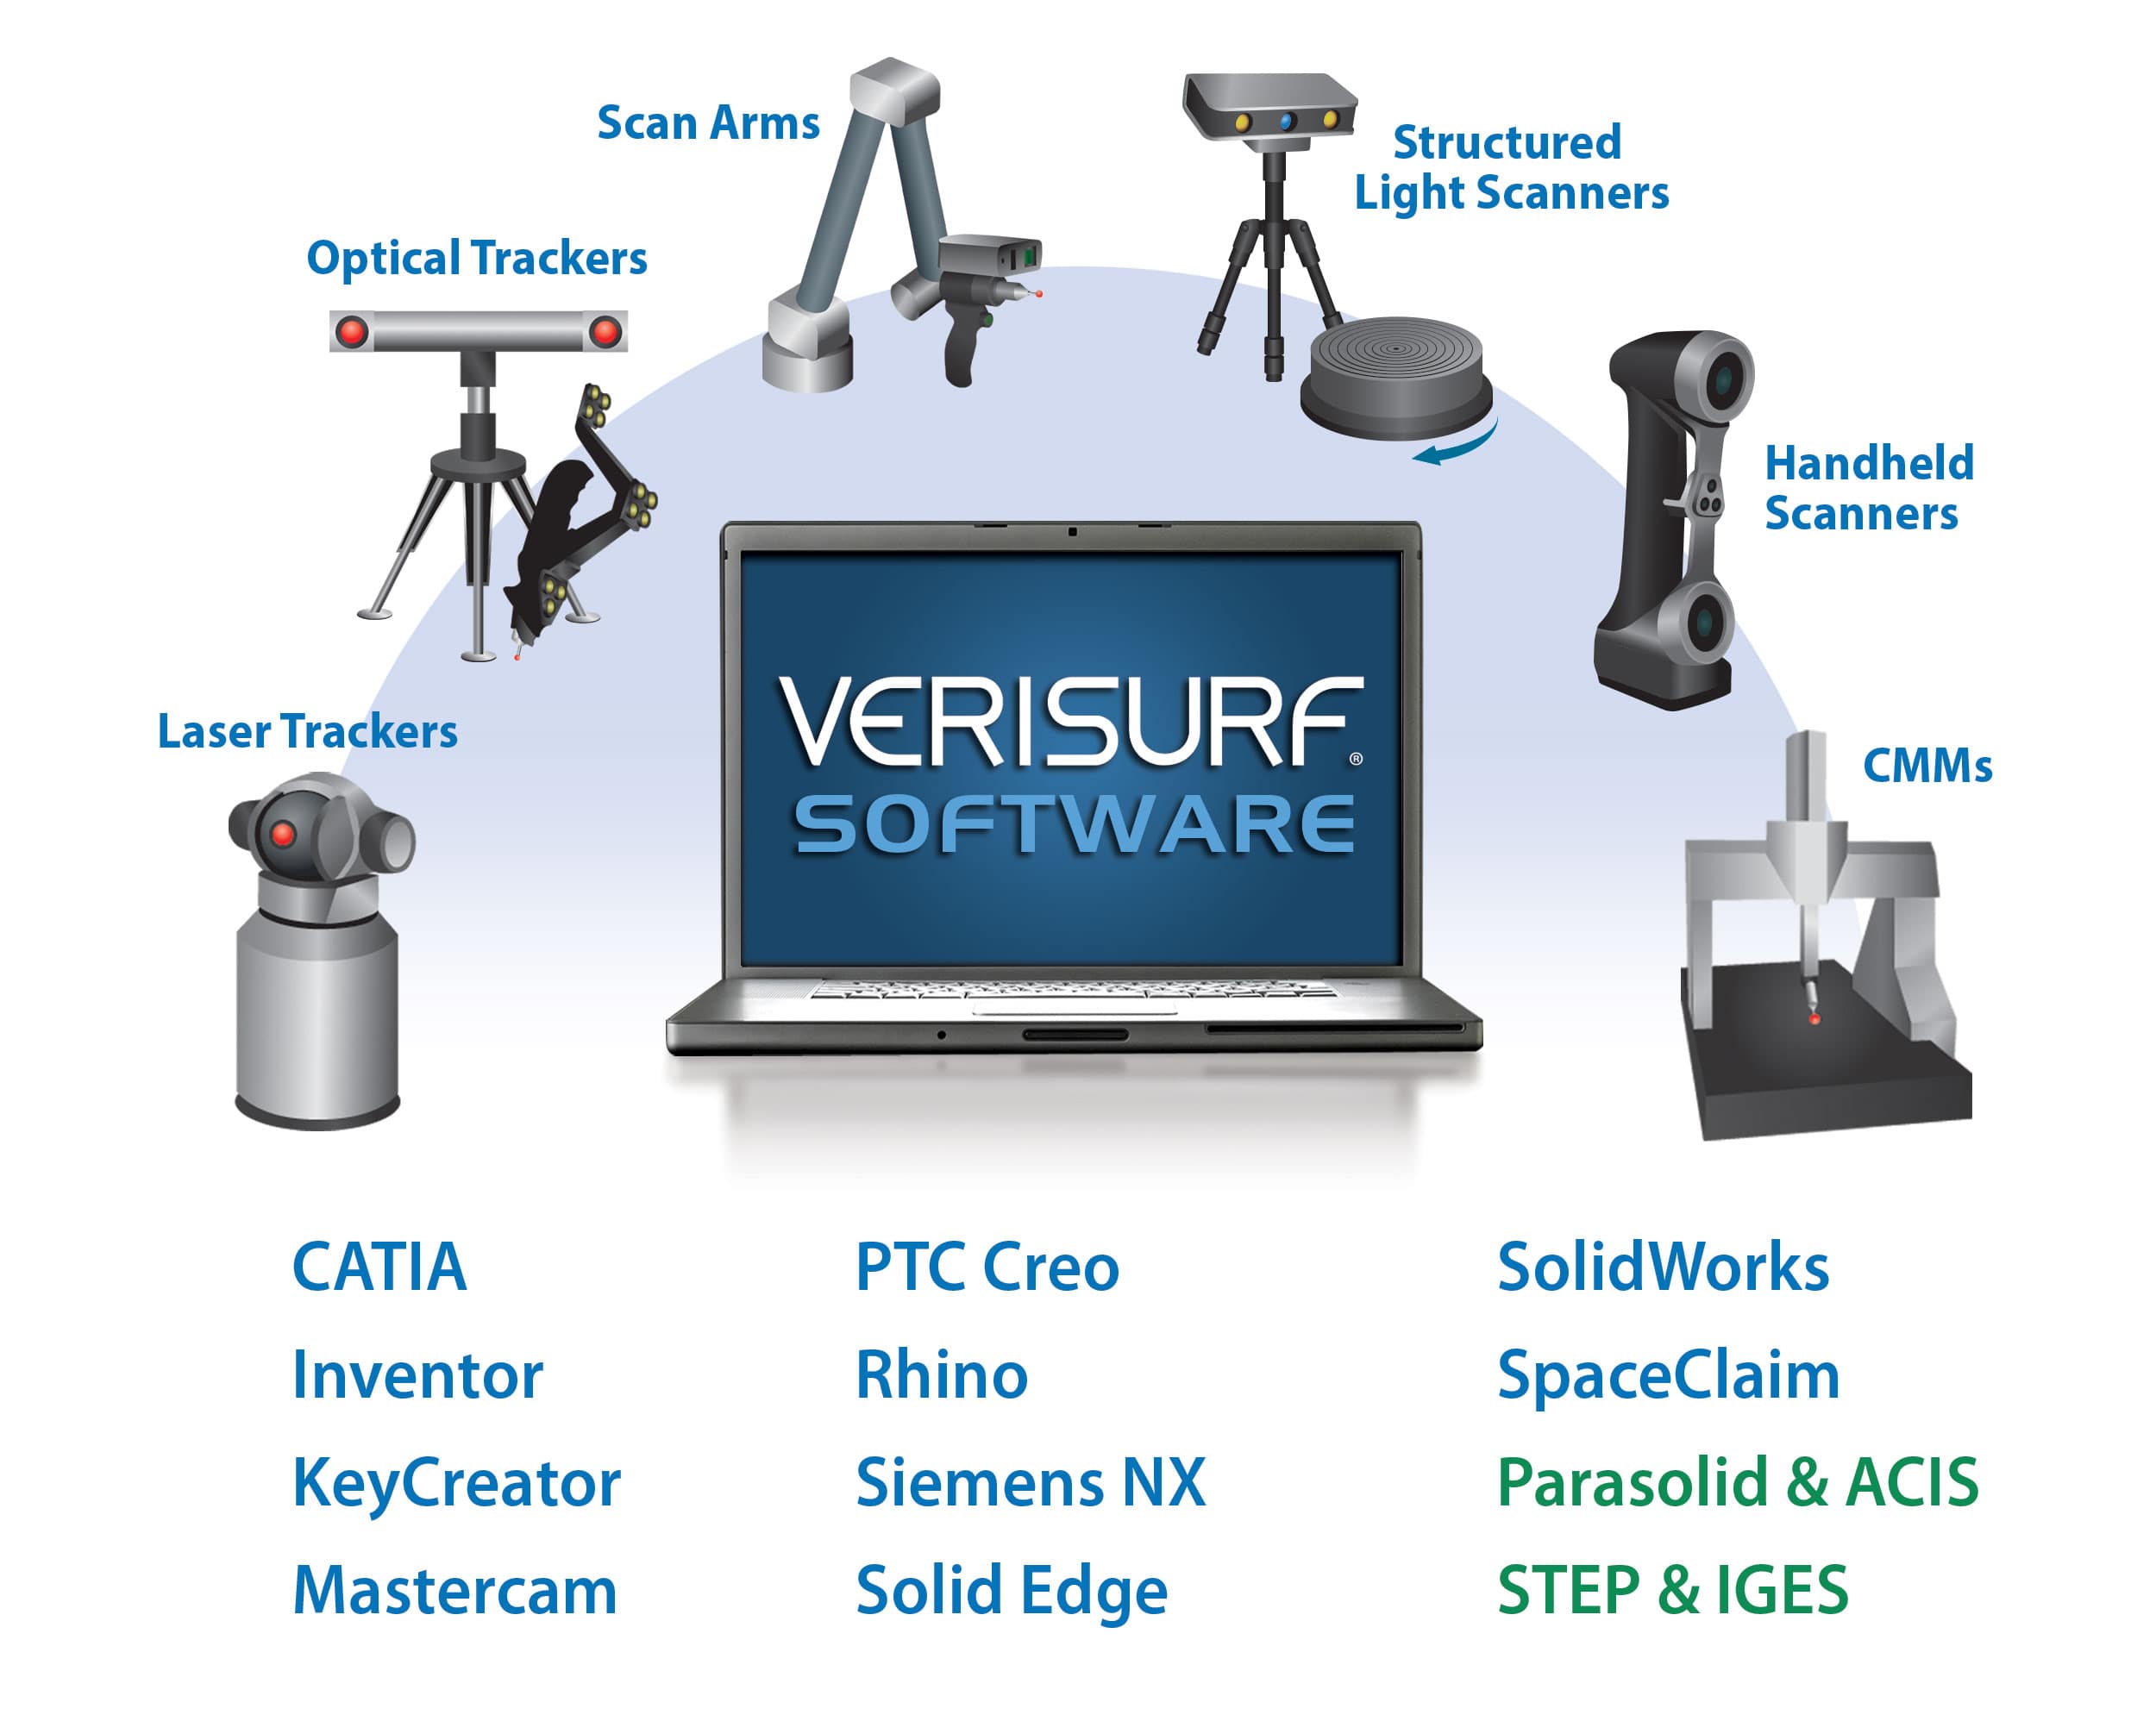 3D Metrology Software, Training and CMMsSoftware